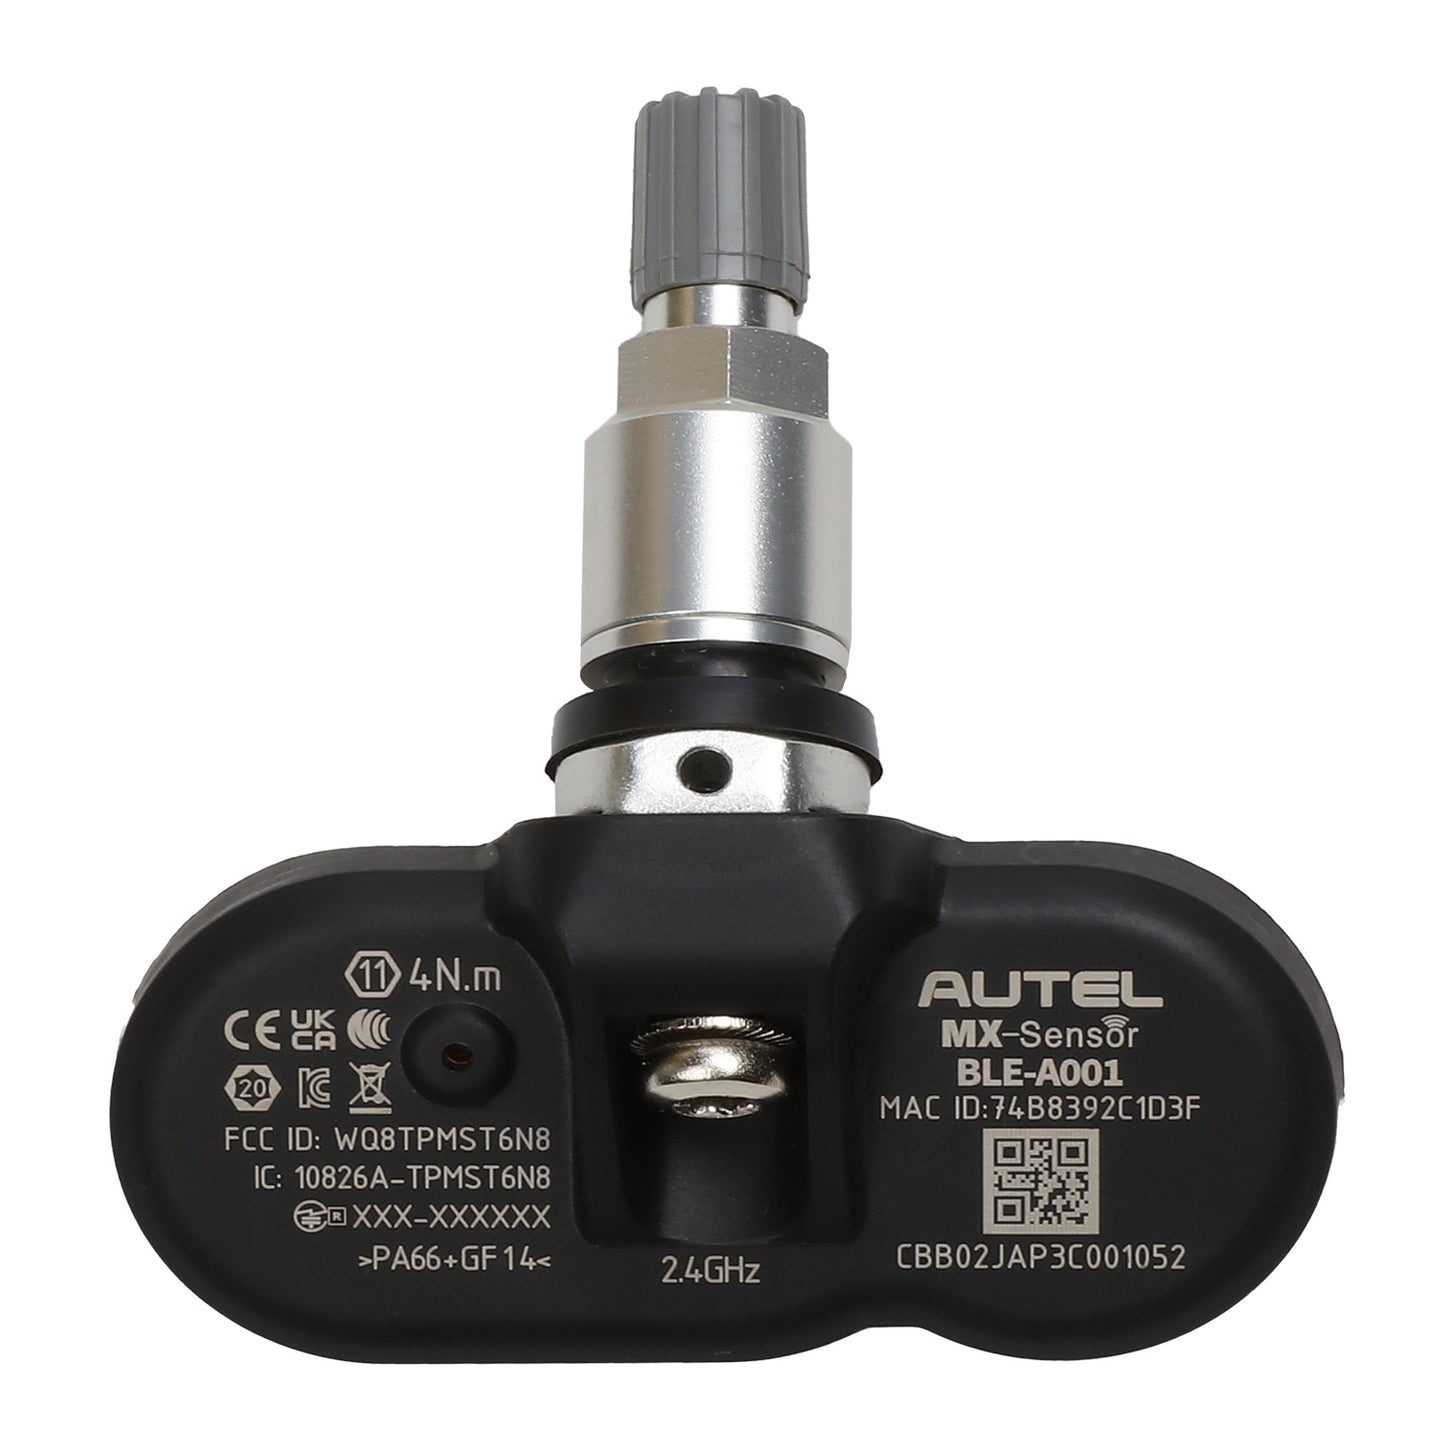 Autel 300100- MX-Sensor BLE